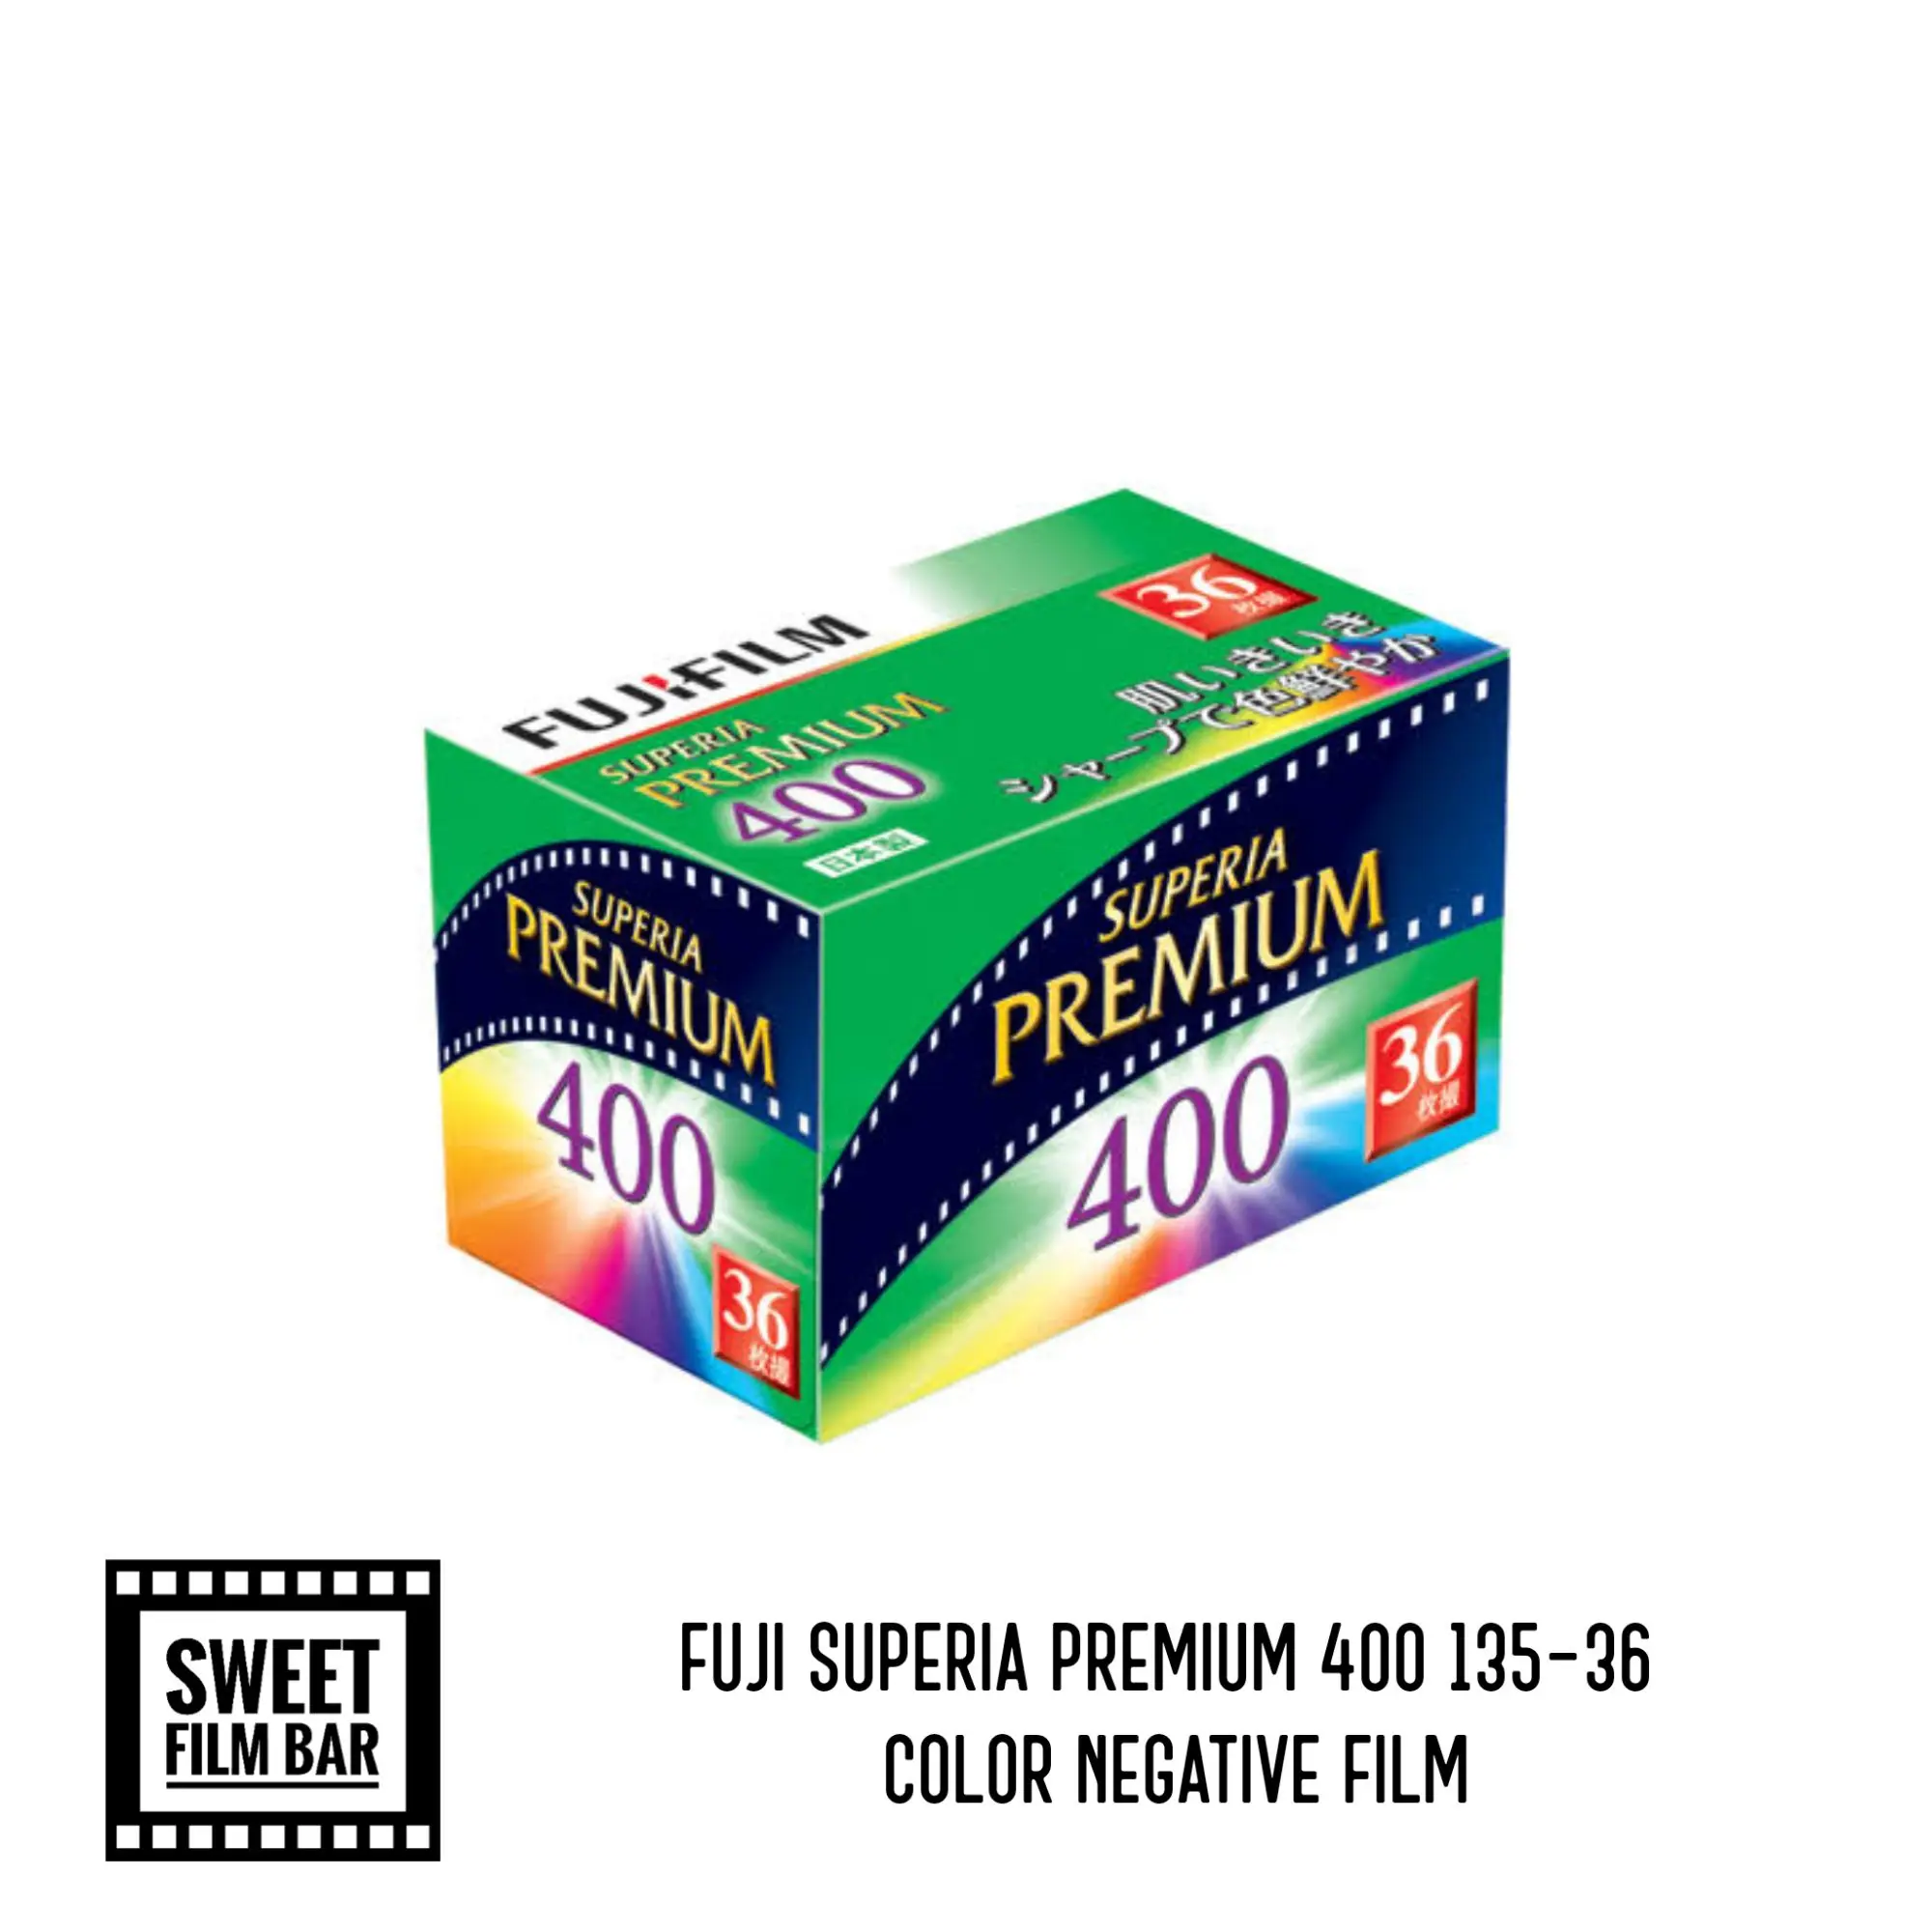 [135color] Fuji Superia Premium 400 135-36 Color Negative Film | Sweet Film Bar สวีท ฟิล์ม บาร์